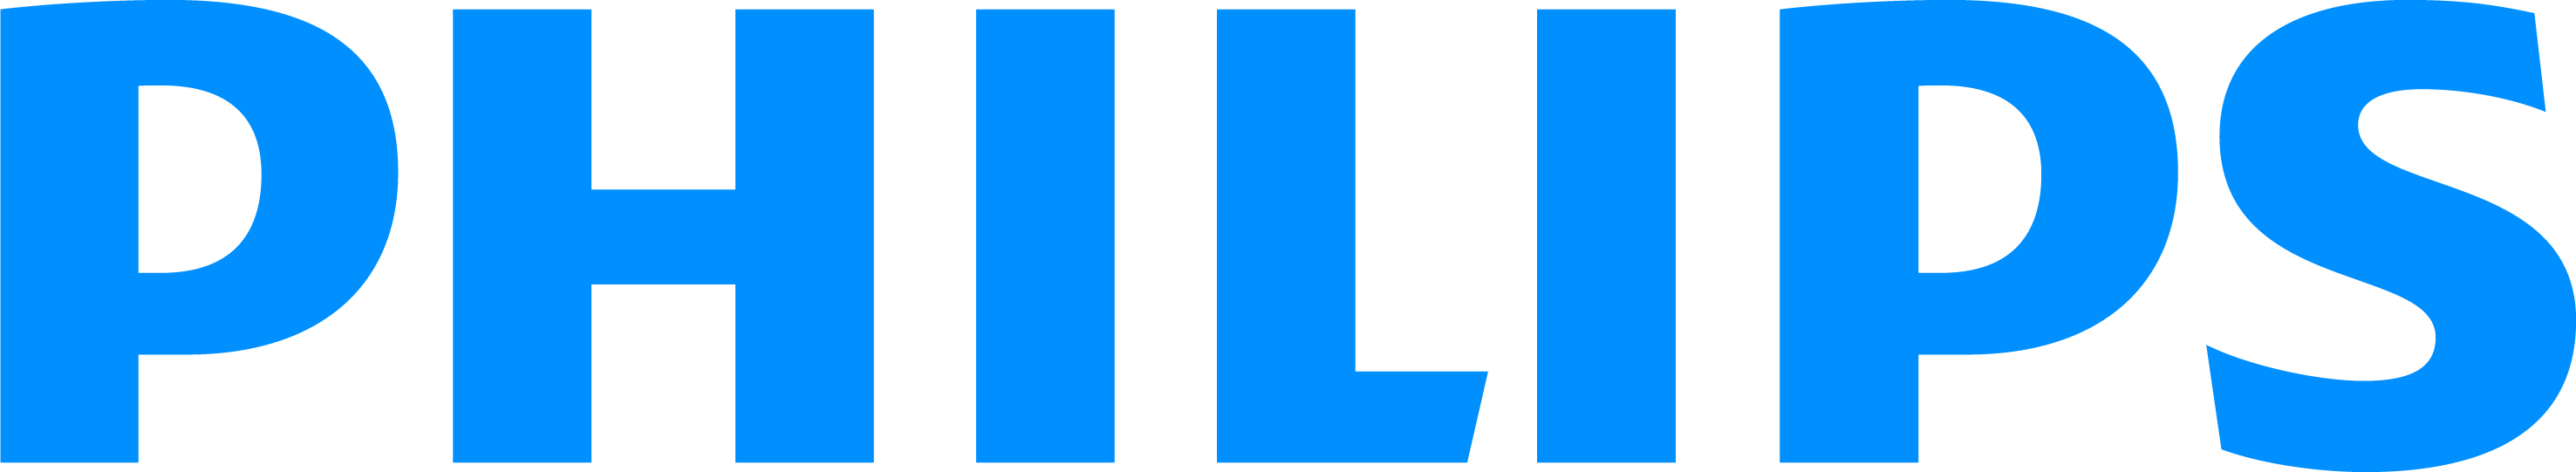 IDEAL AUTO - logo Philips